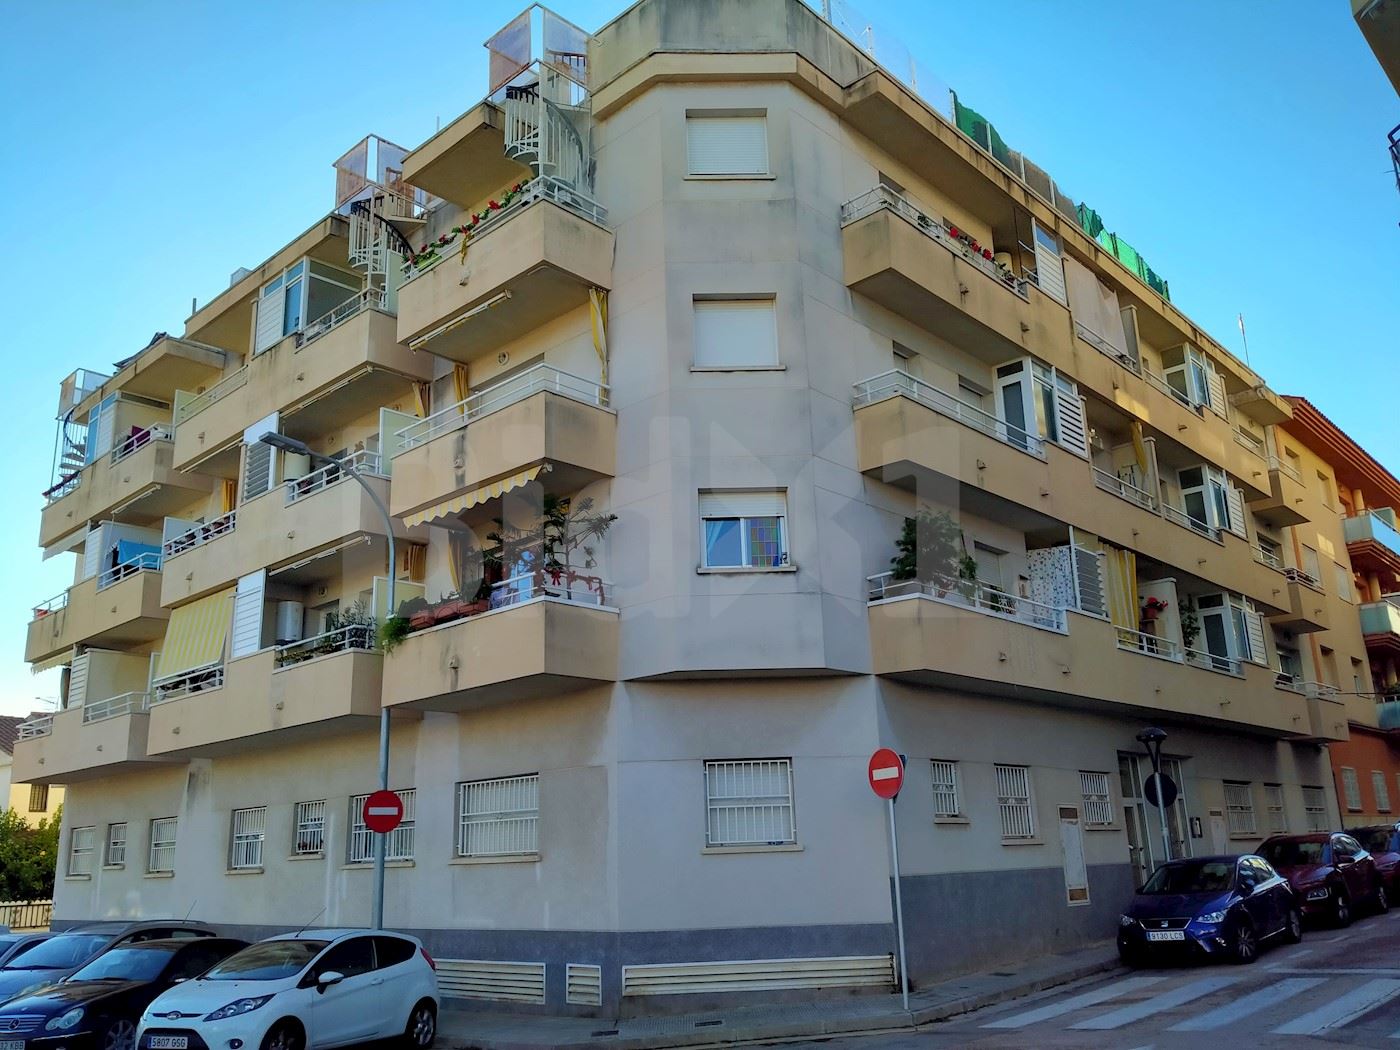 Calle Manuel Soler, Calafell, Tarragona 1/20